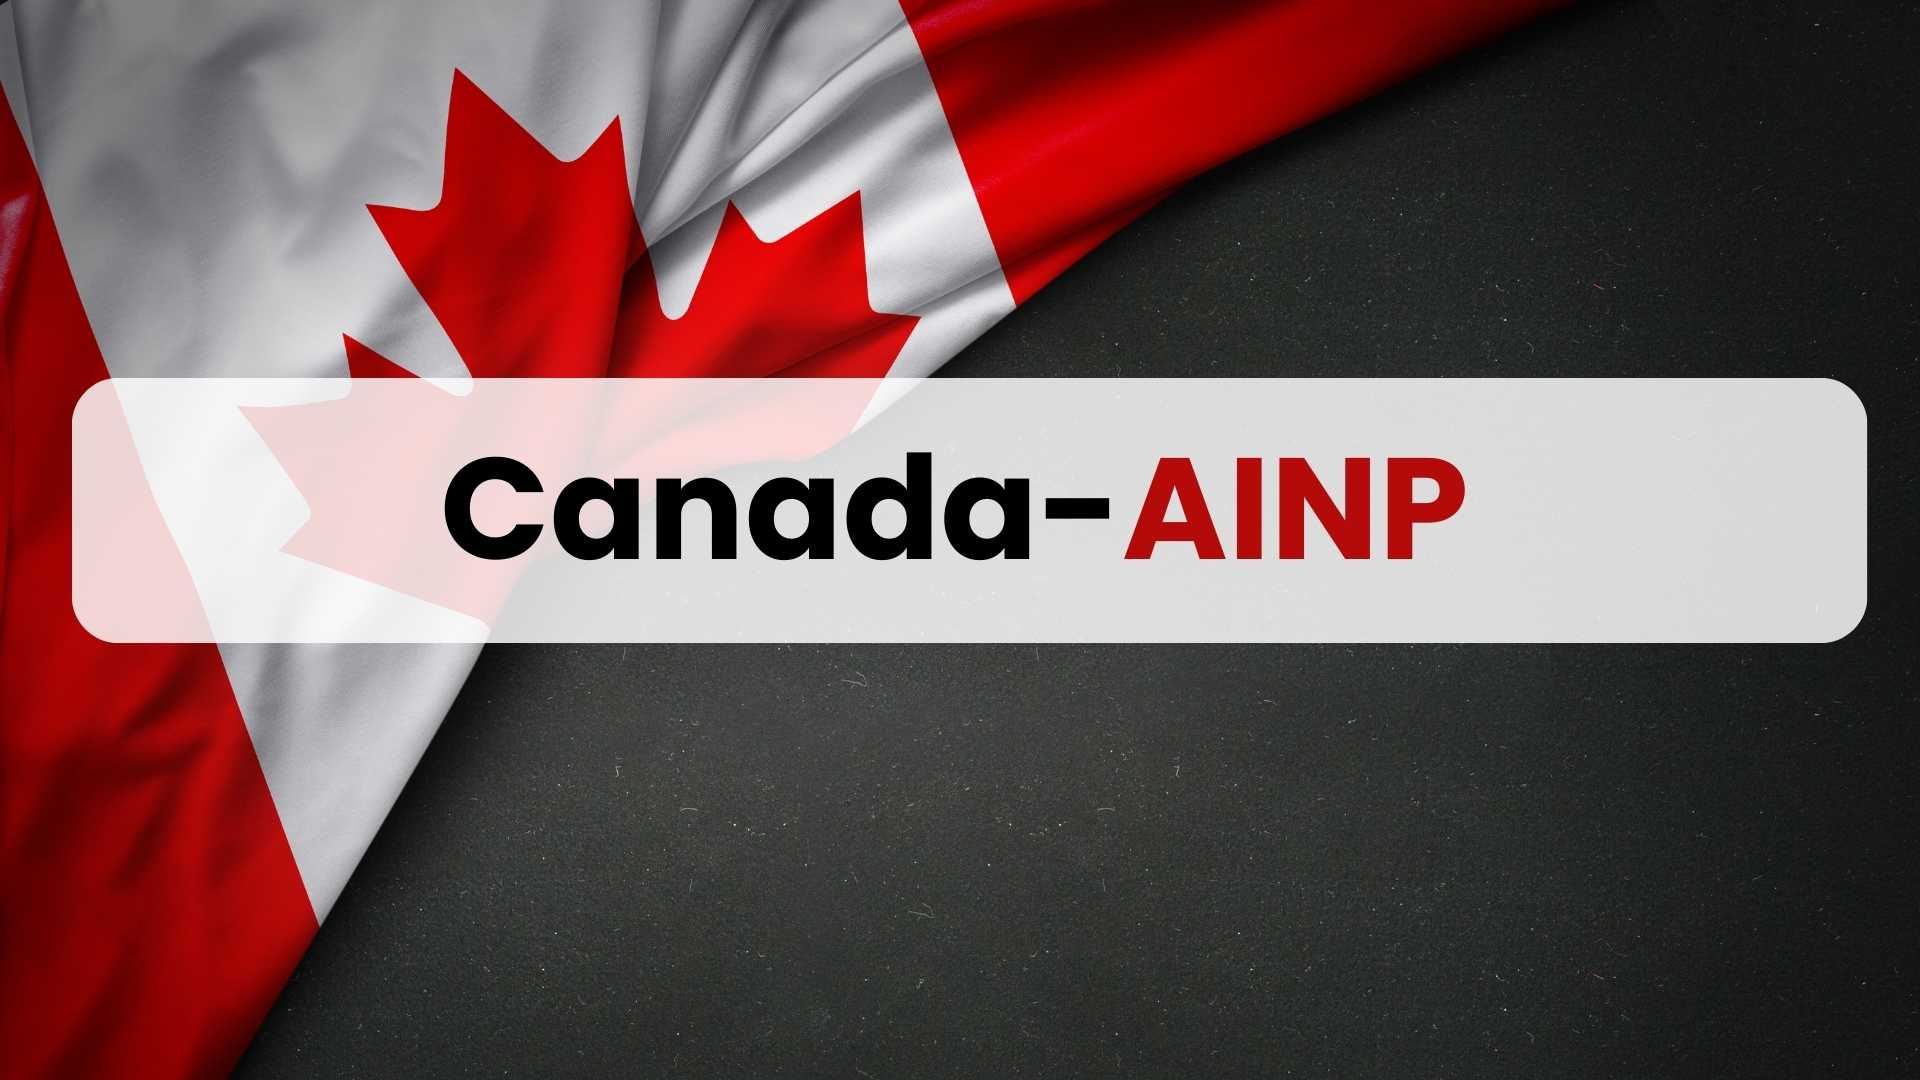 CANADA-AINP (The Alberta Immigrant Nominee Program)